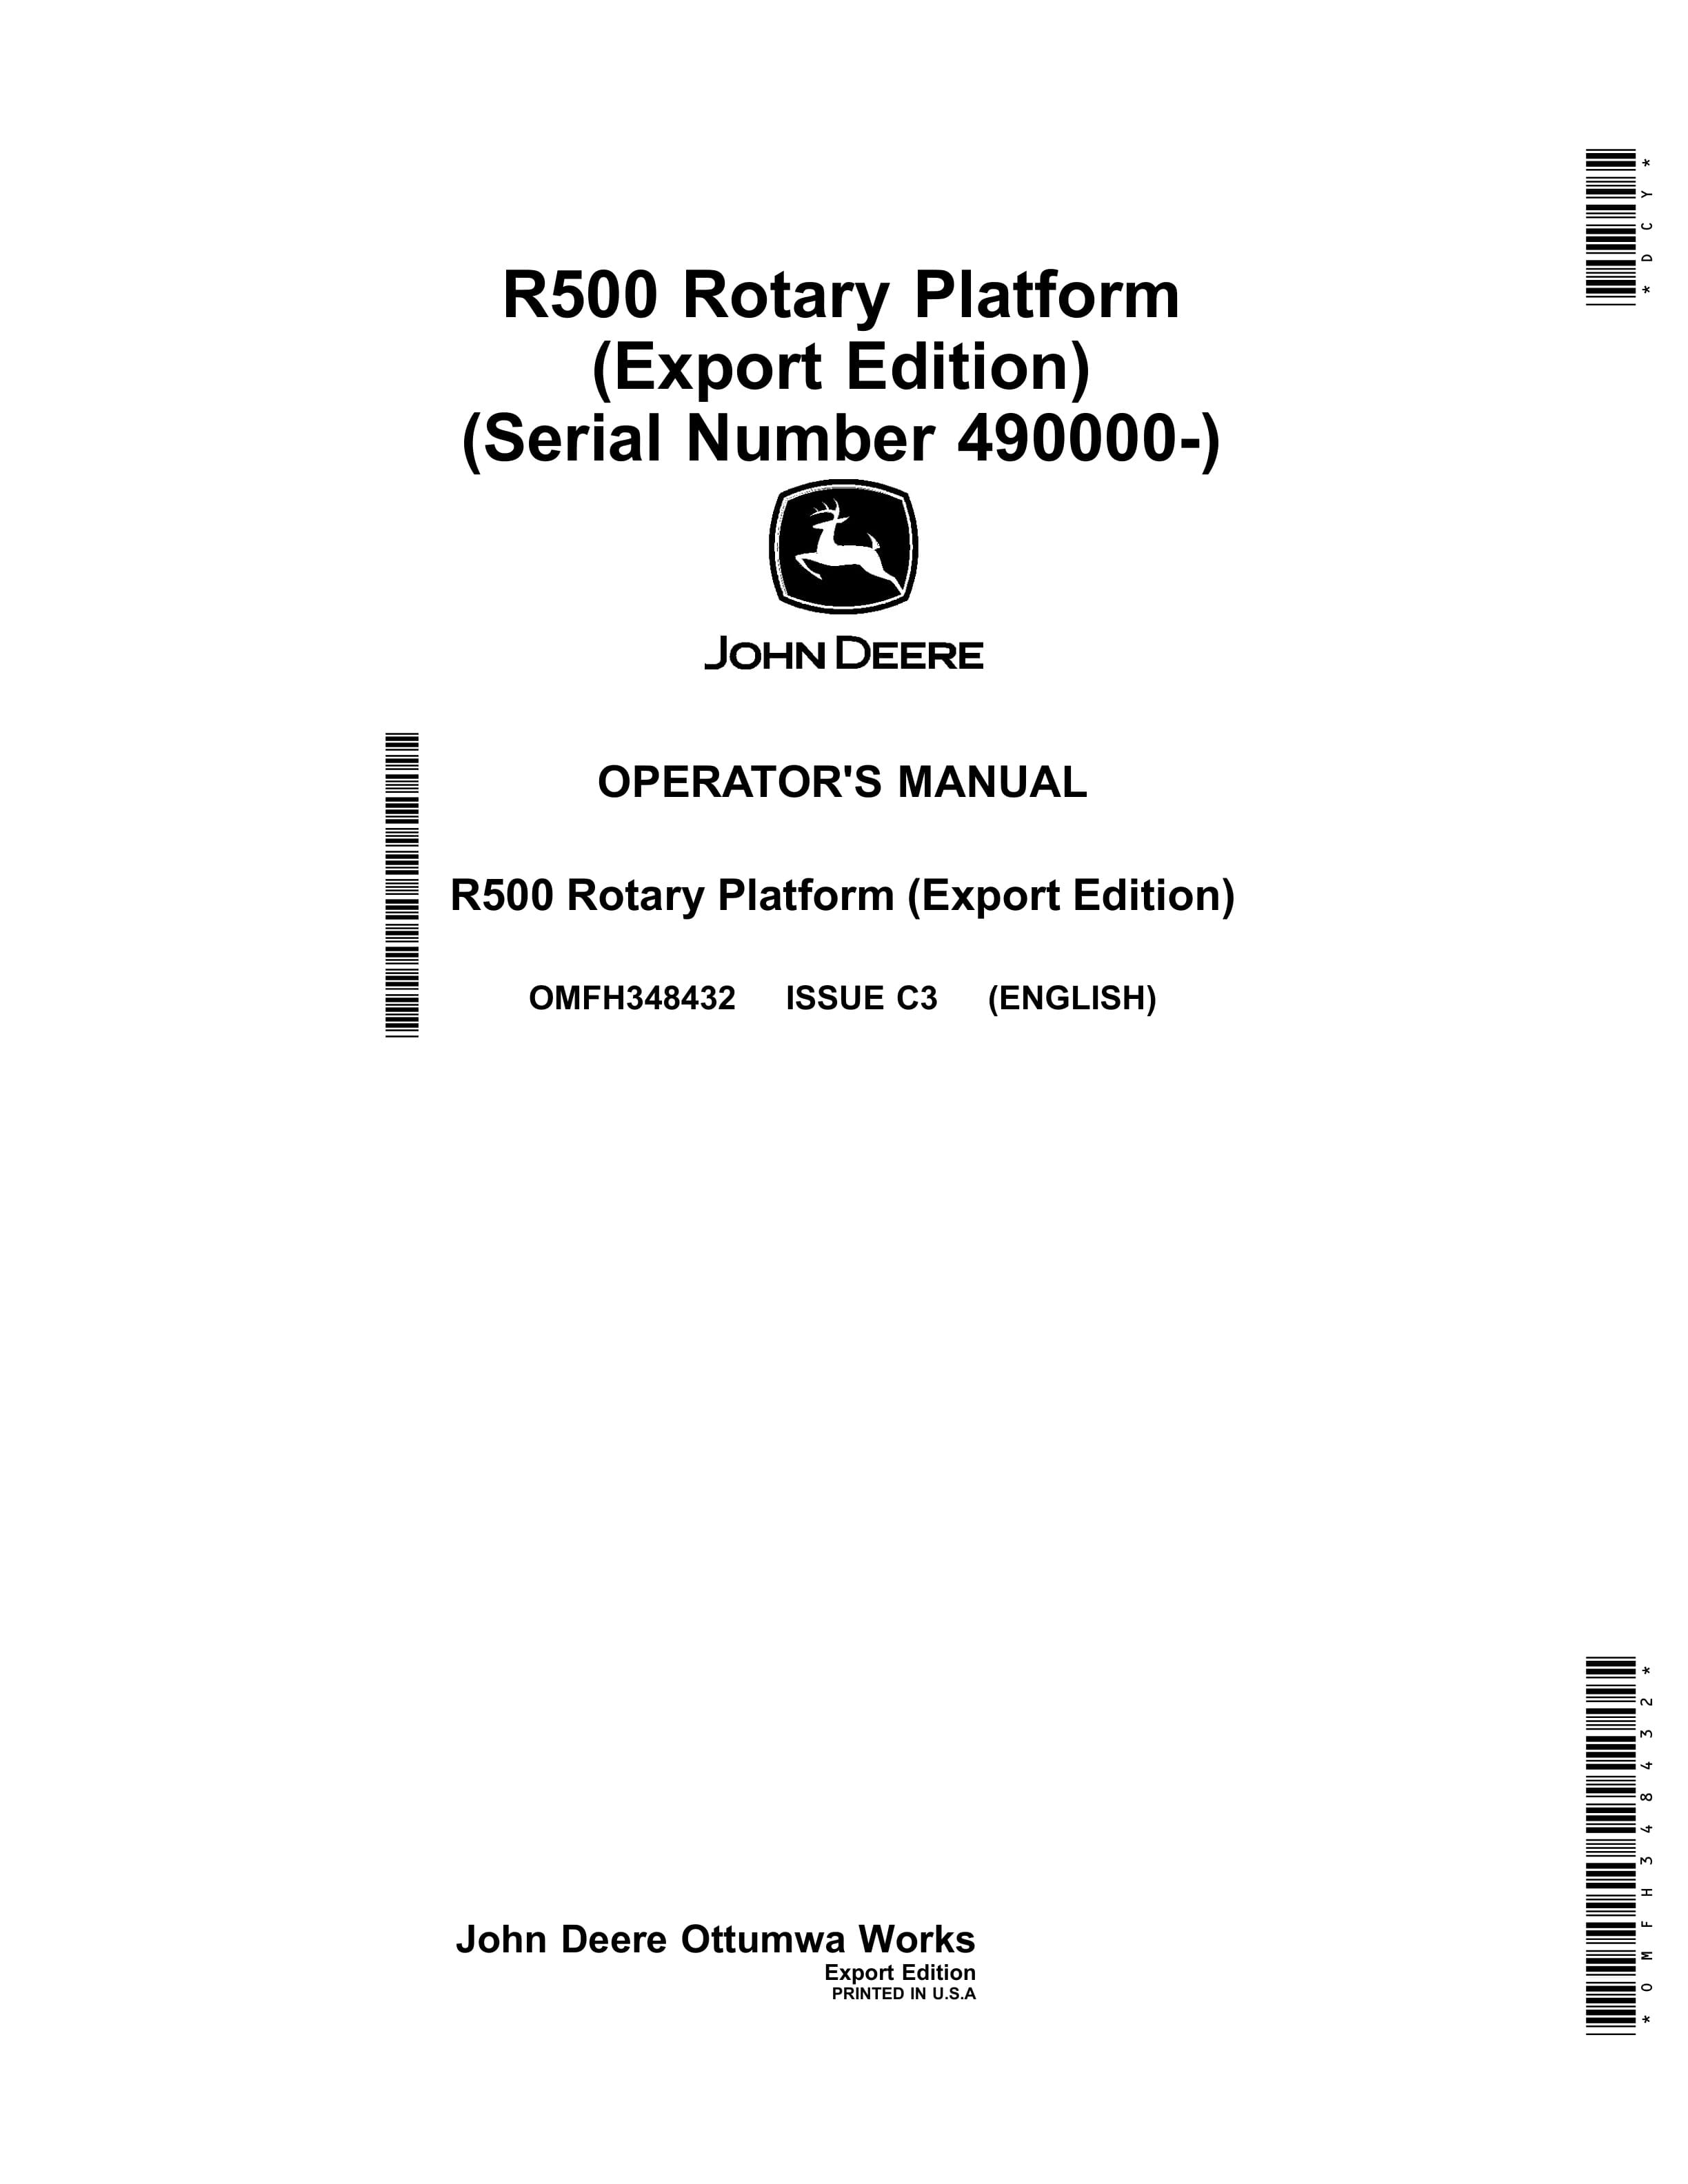 John Deere R500 Rotary Platform Operator Manual OMFH348432 1